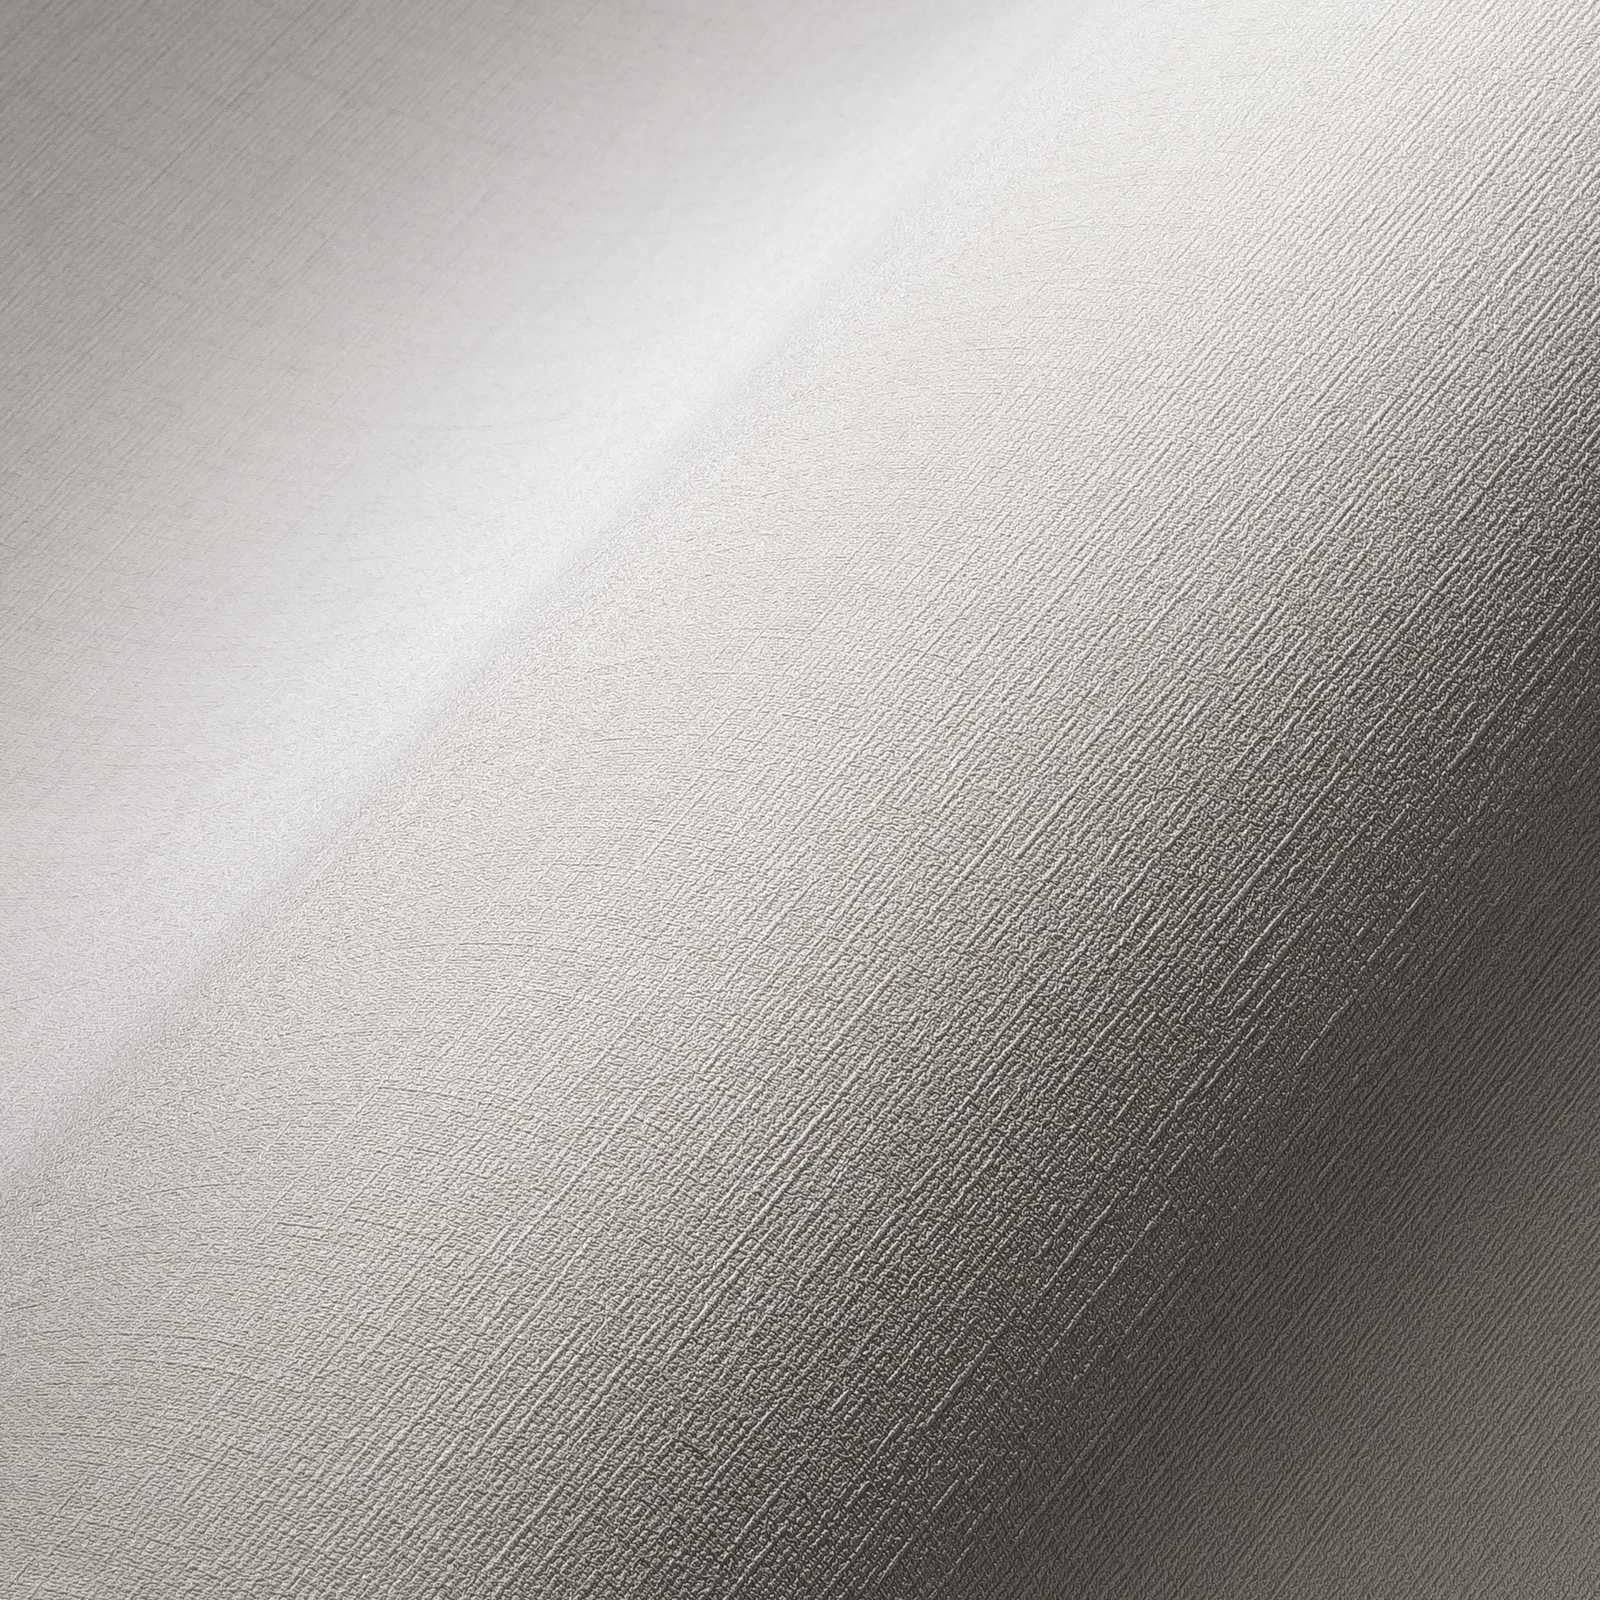             Papel pintado unitario gris claro con estructura de lino, moteado - gris
        